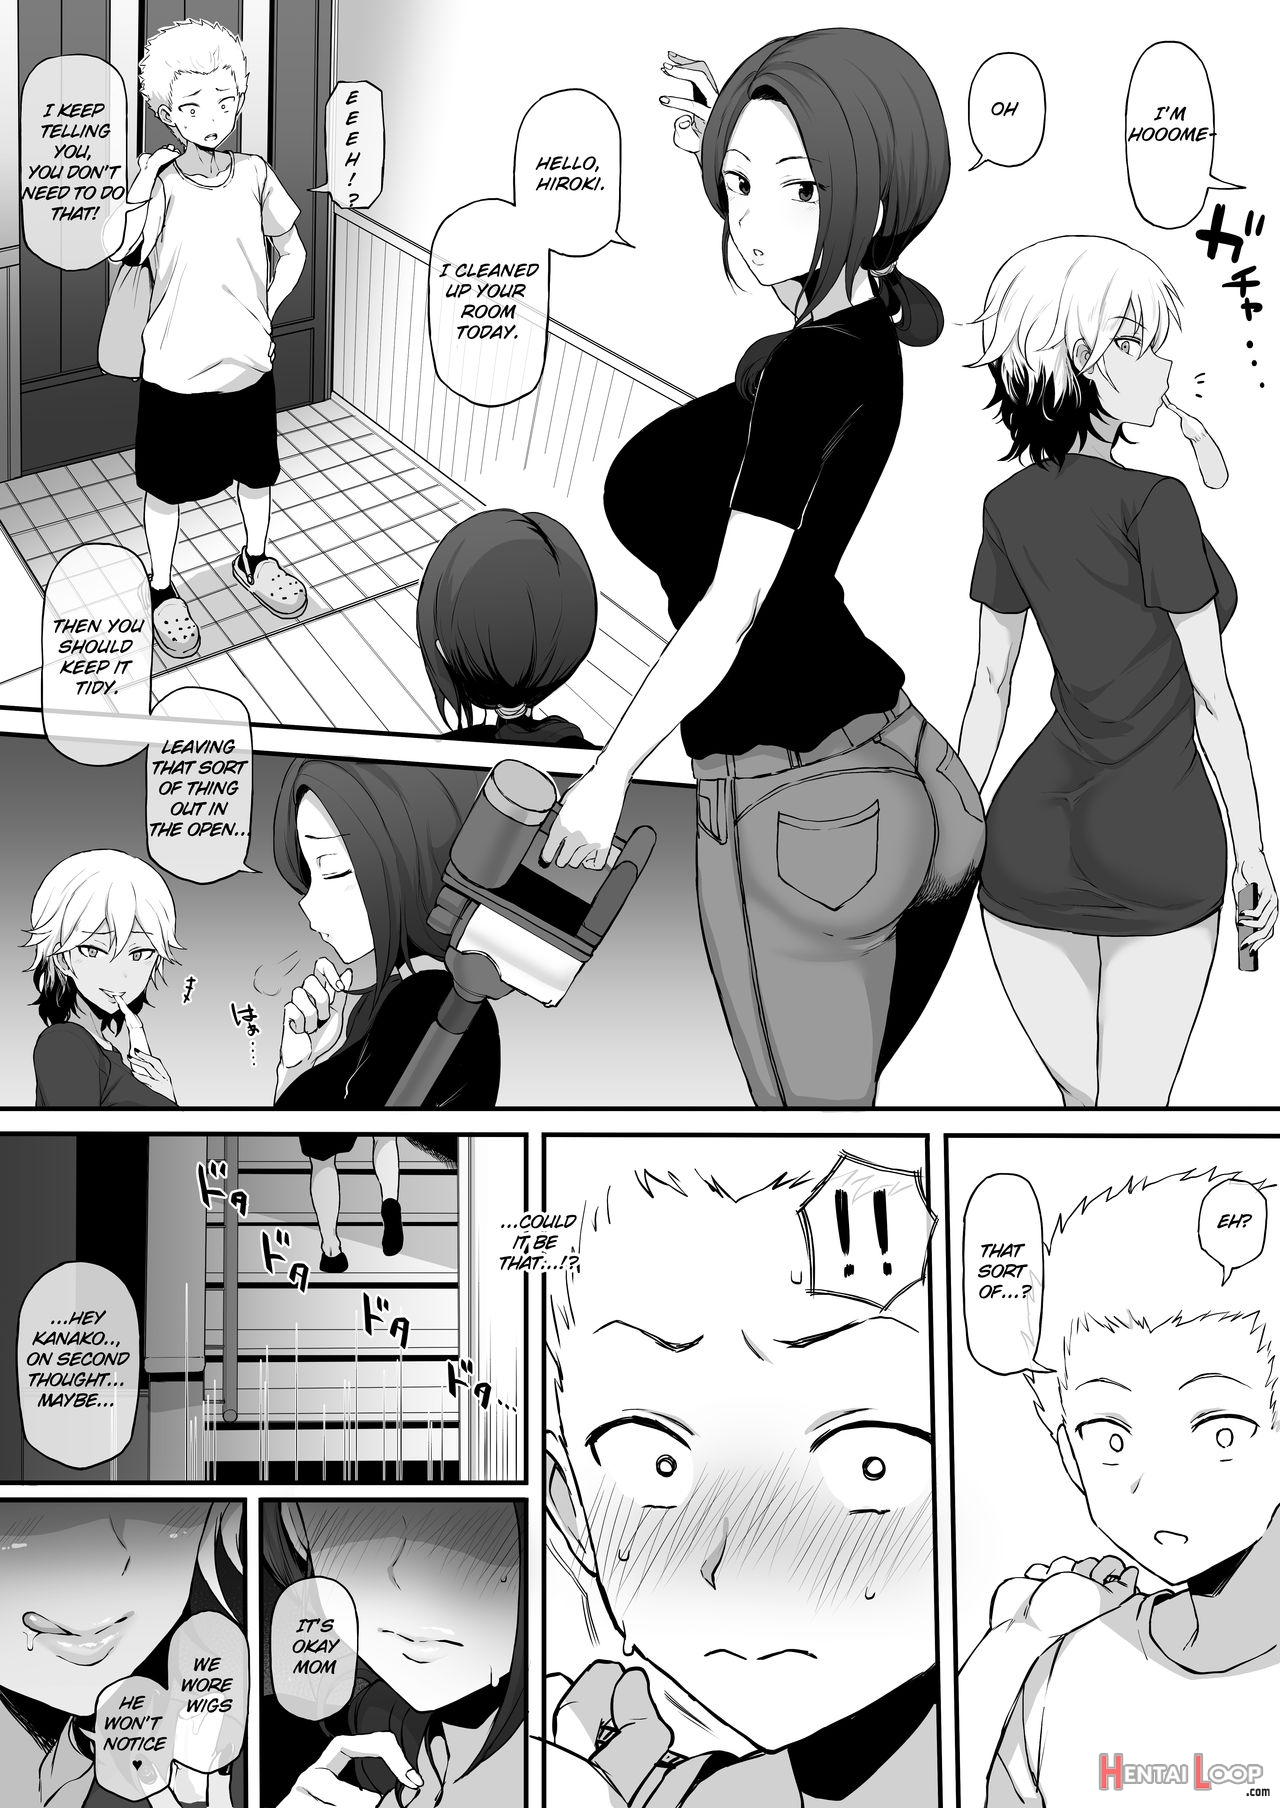 Kokujin No Tenkousei Ntr Ru Chapters 1-6 Part 1 Plus Bonus Chapter: Stolen Mother’s Breasts page 27